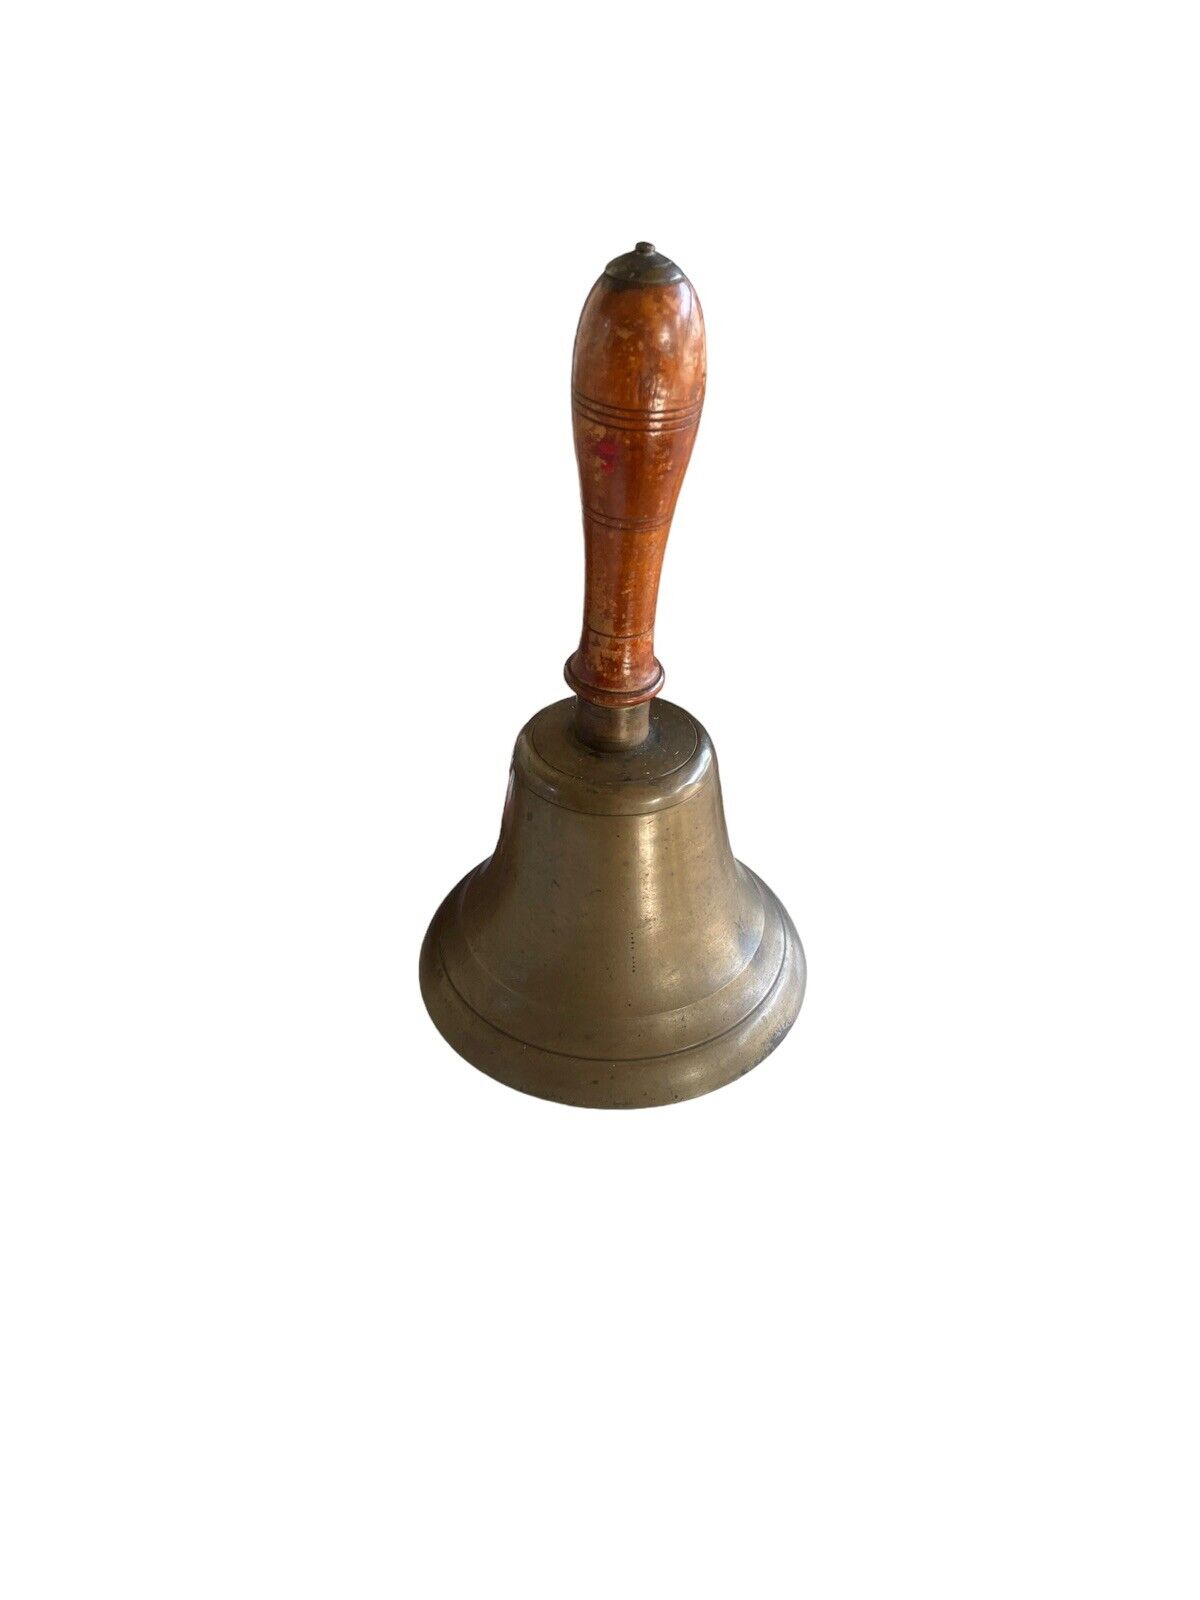 Antique 19th Century Brass & Wood BELL